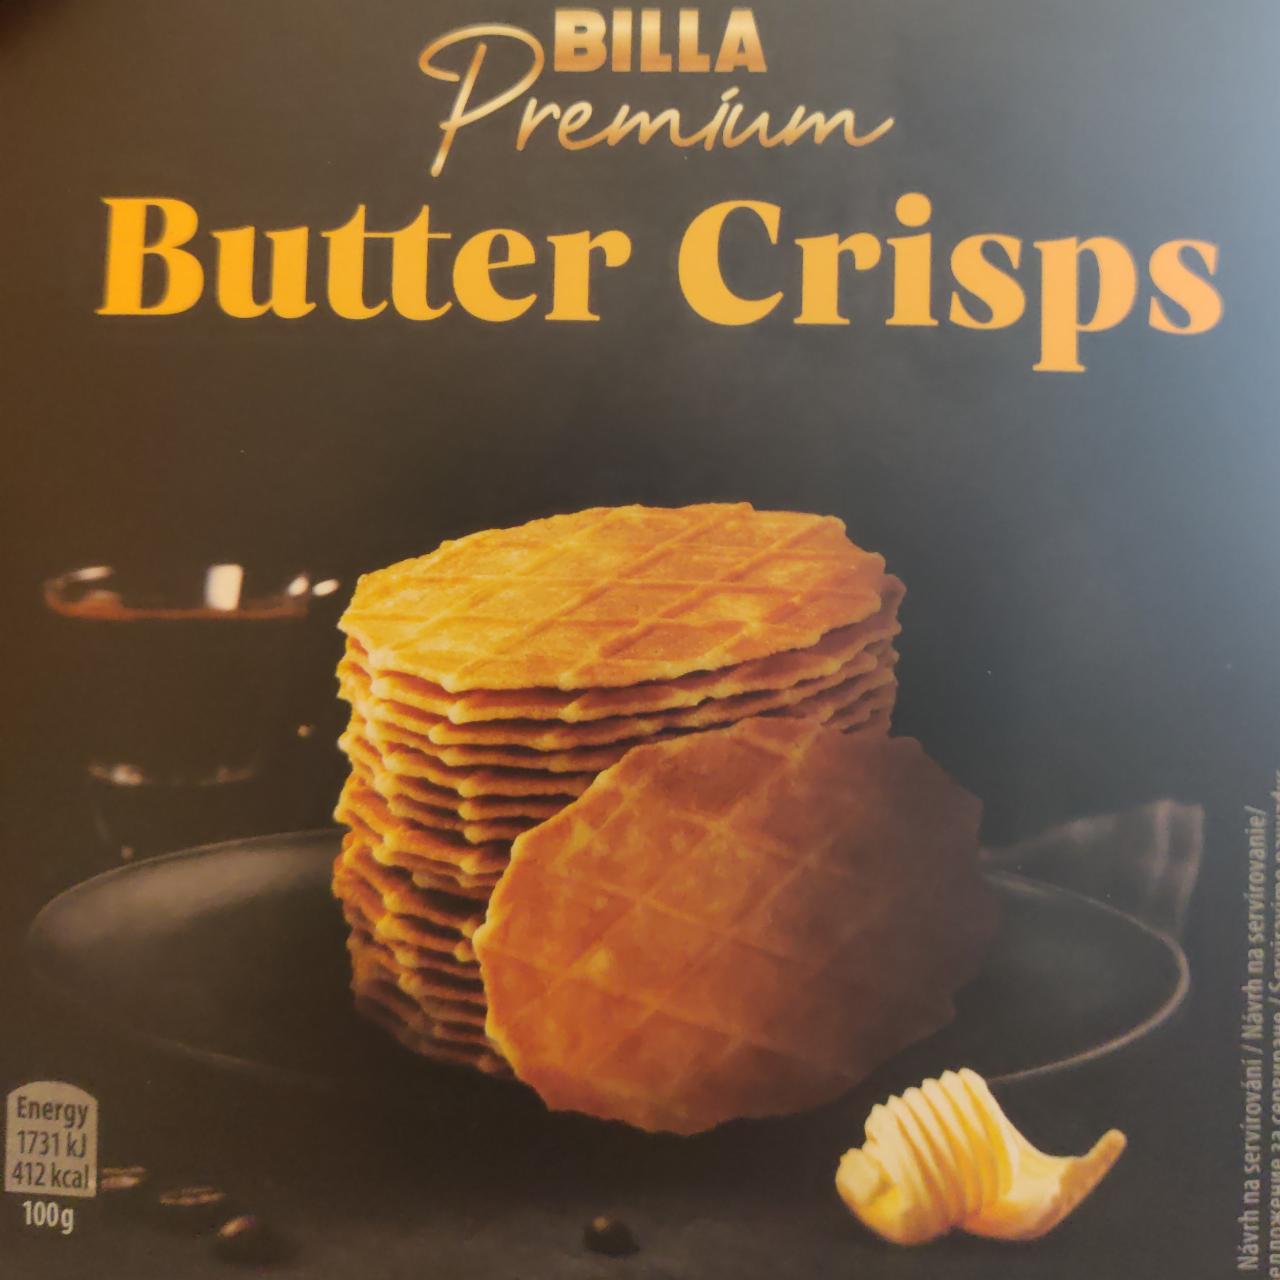 Fotografie - Butter crisps Billa Premium